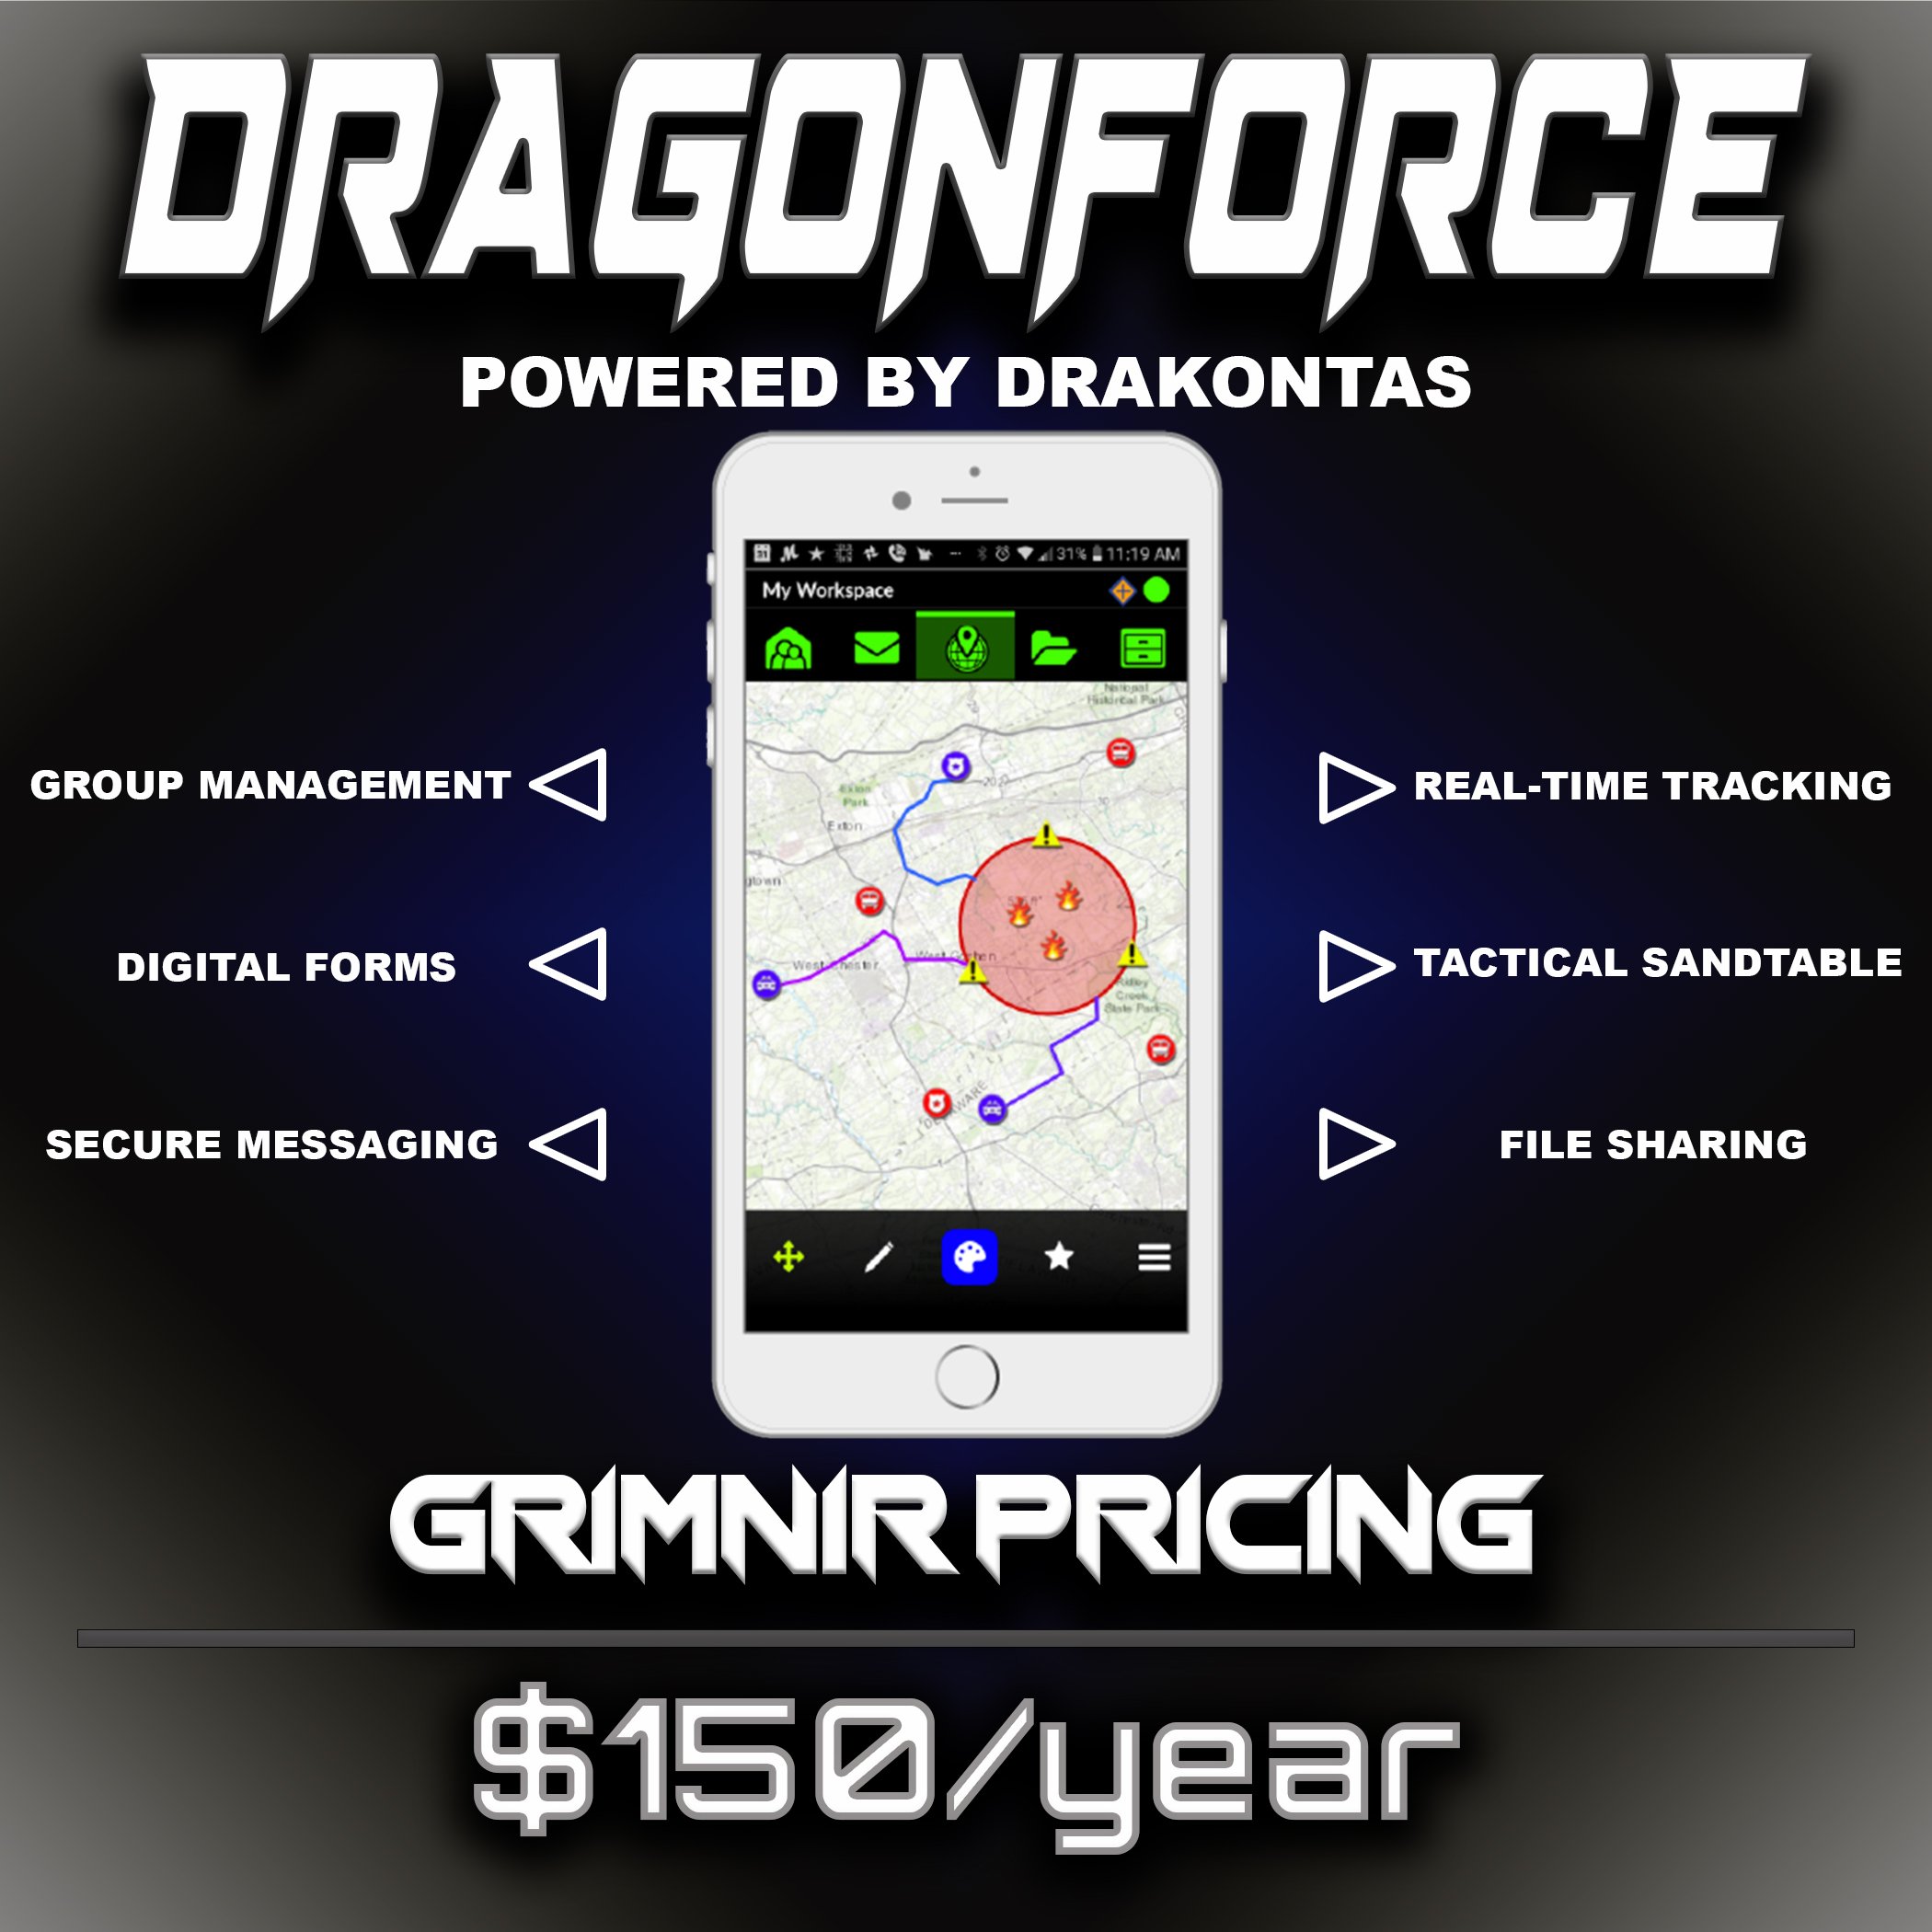 DragonForceInfographic (1).jpg